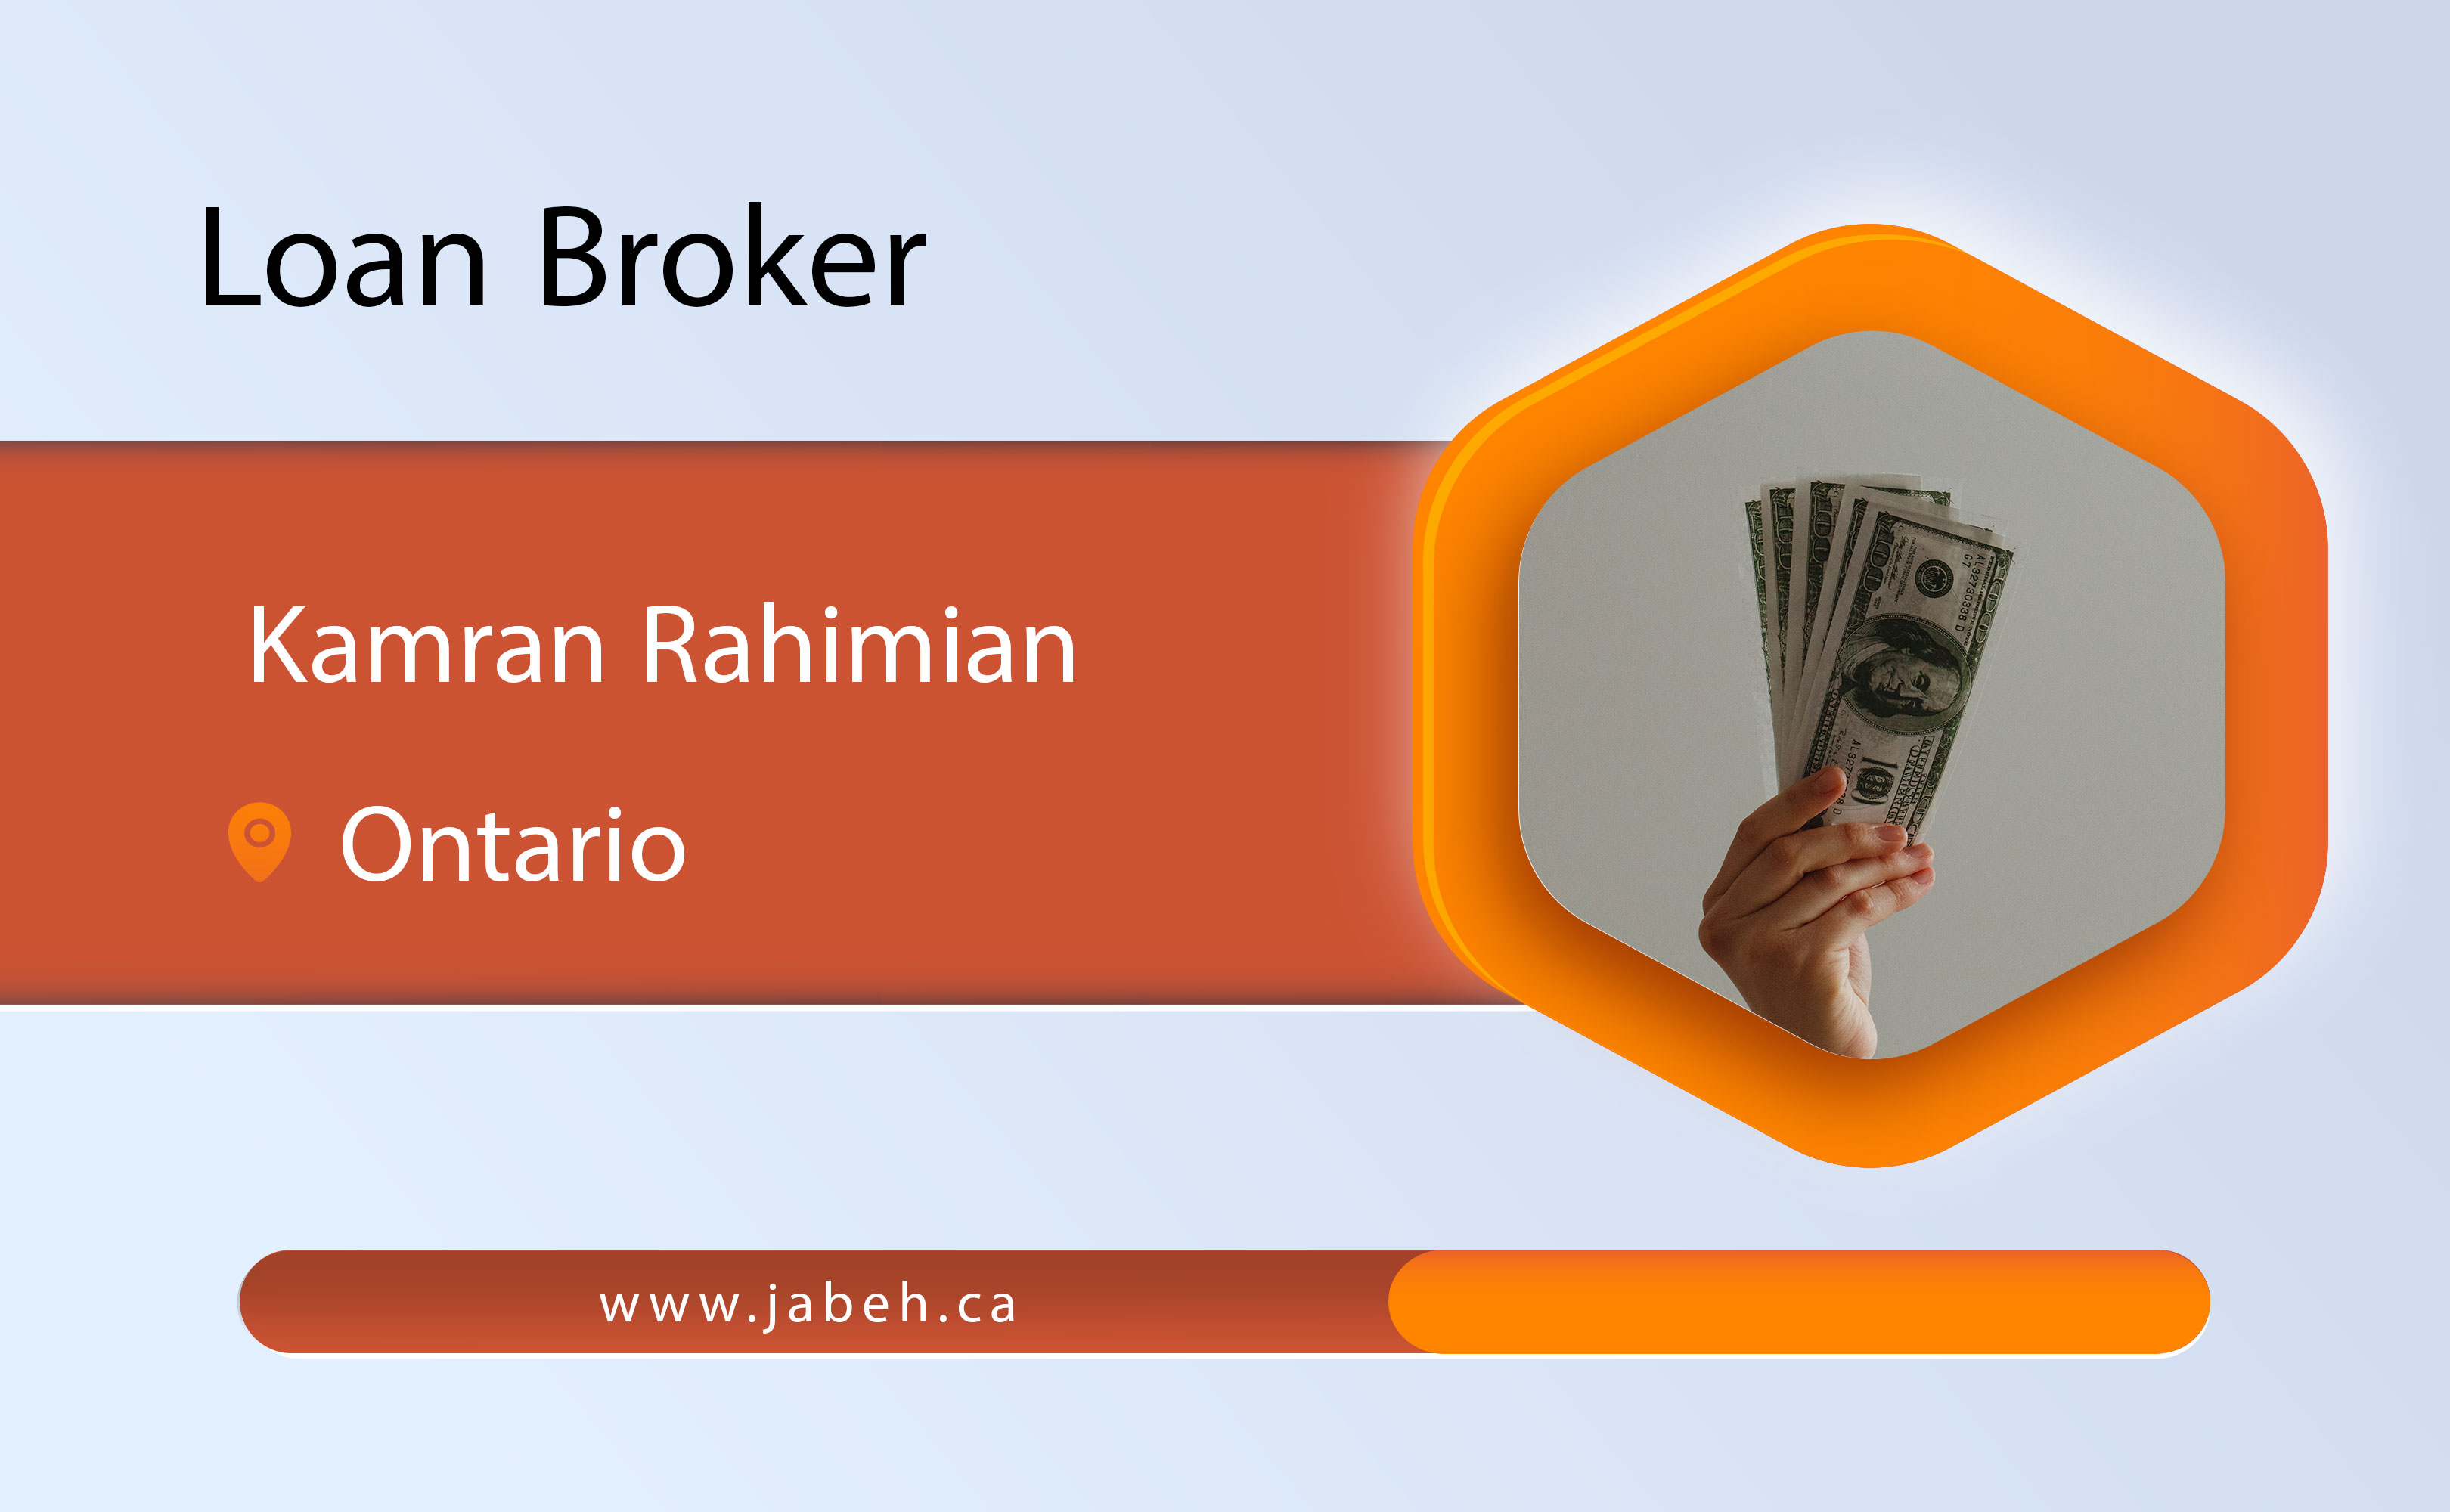 Iranian loan broker Kamran Rahimian in Ontario